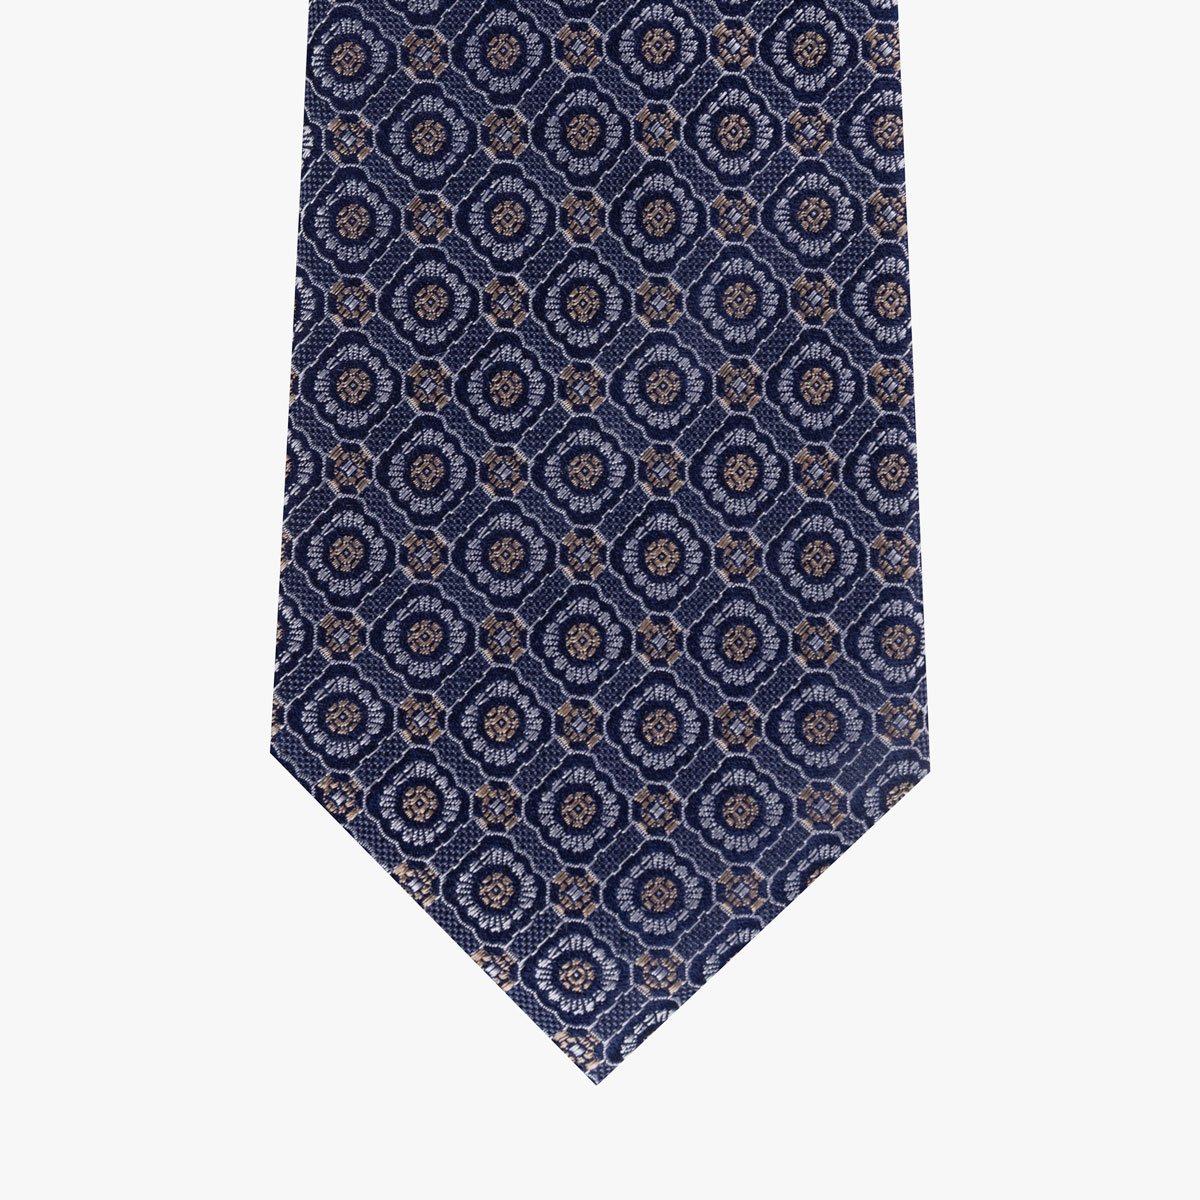 Krawatte aus Seide in dunkelblau gemustert